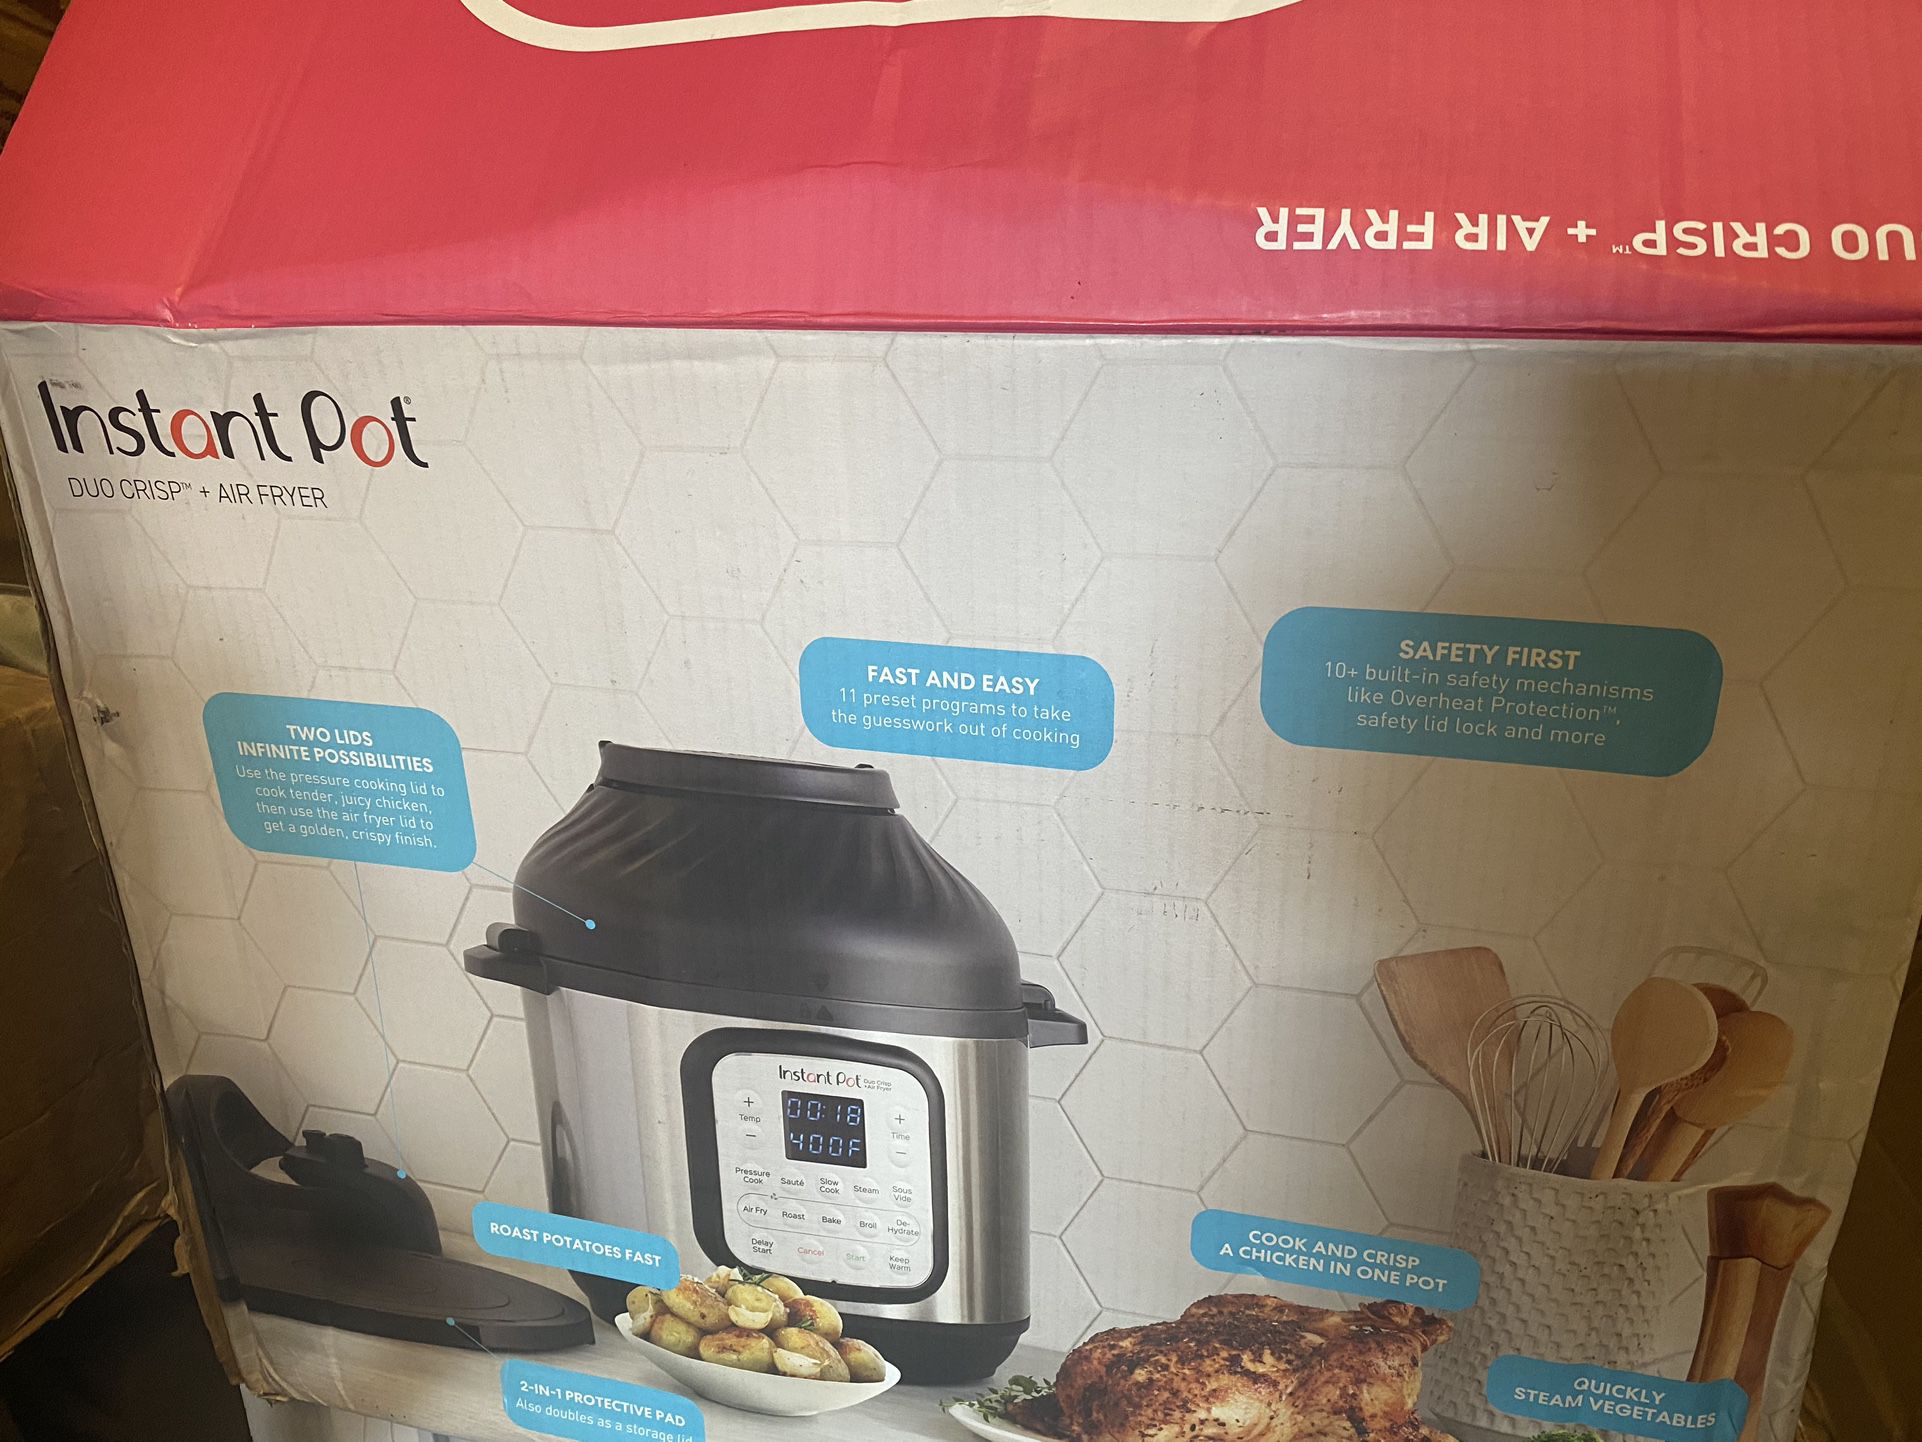 Instant Pot Duo Crisp + Air Fryer 8-quart Multi-Use Pressure Cooker(new)